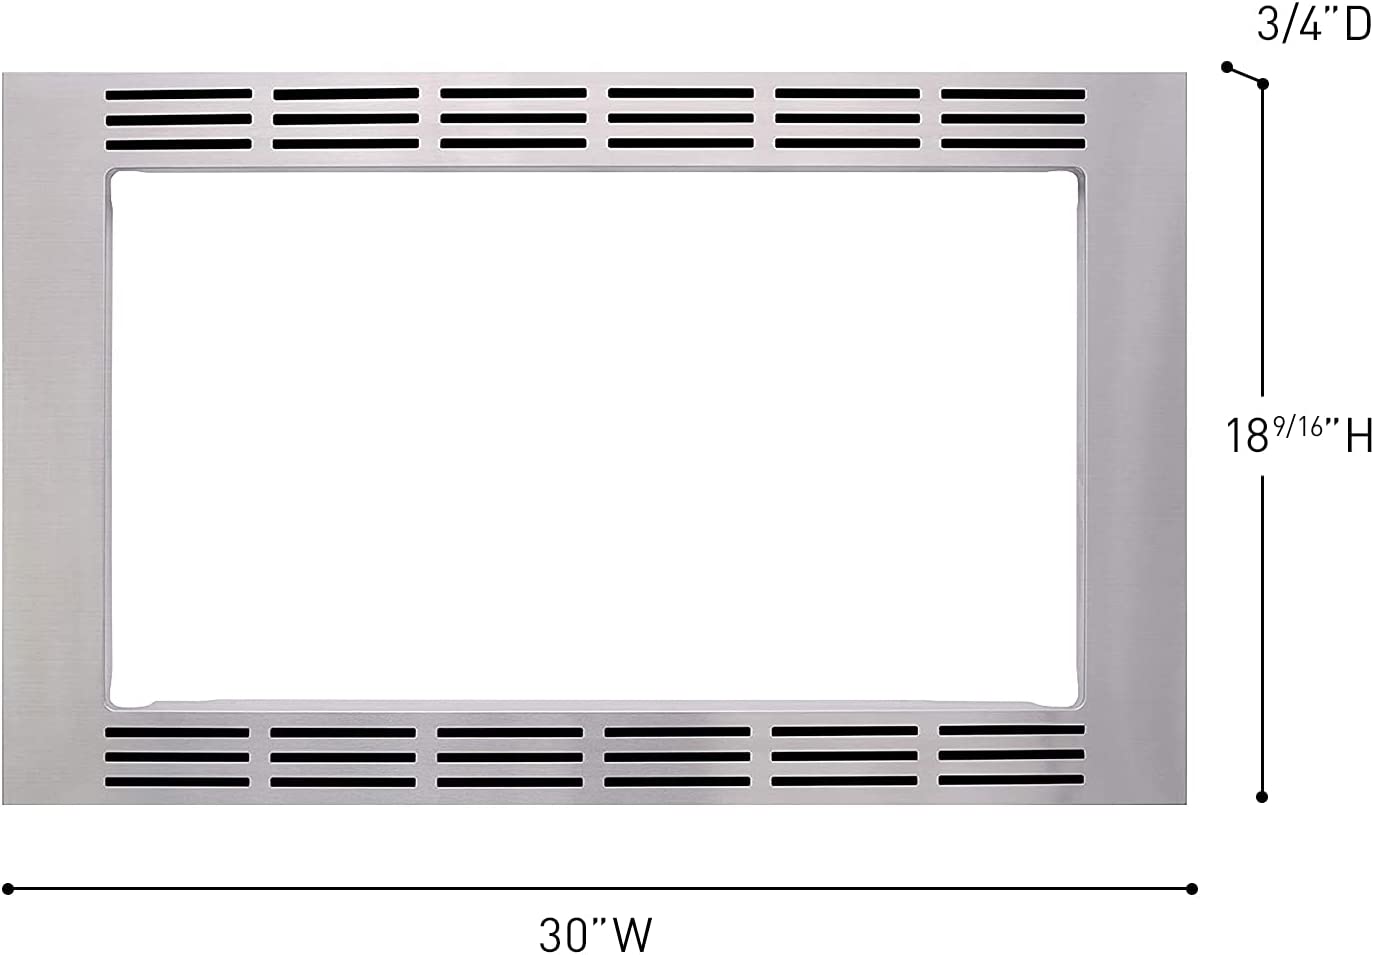 Panasonic NN-TK932SS 30" Trik Kit for 2.2 CF Microwave Ovens - Like New